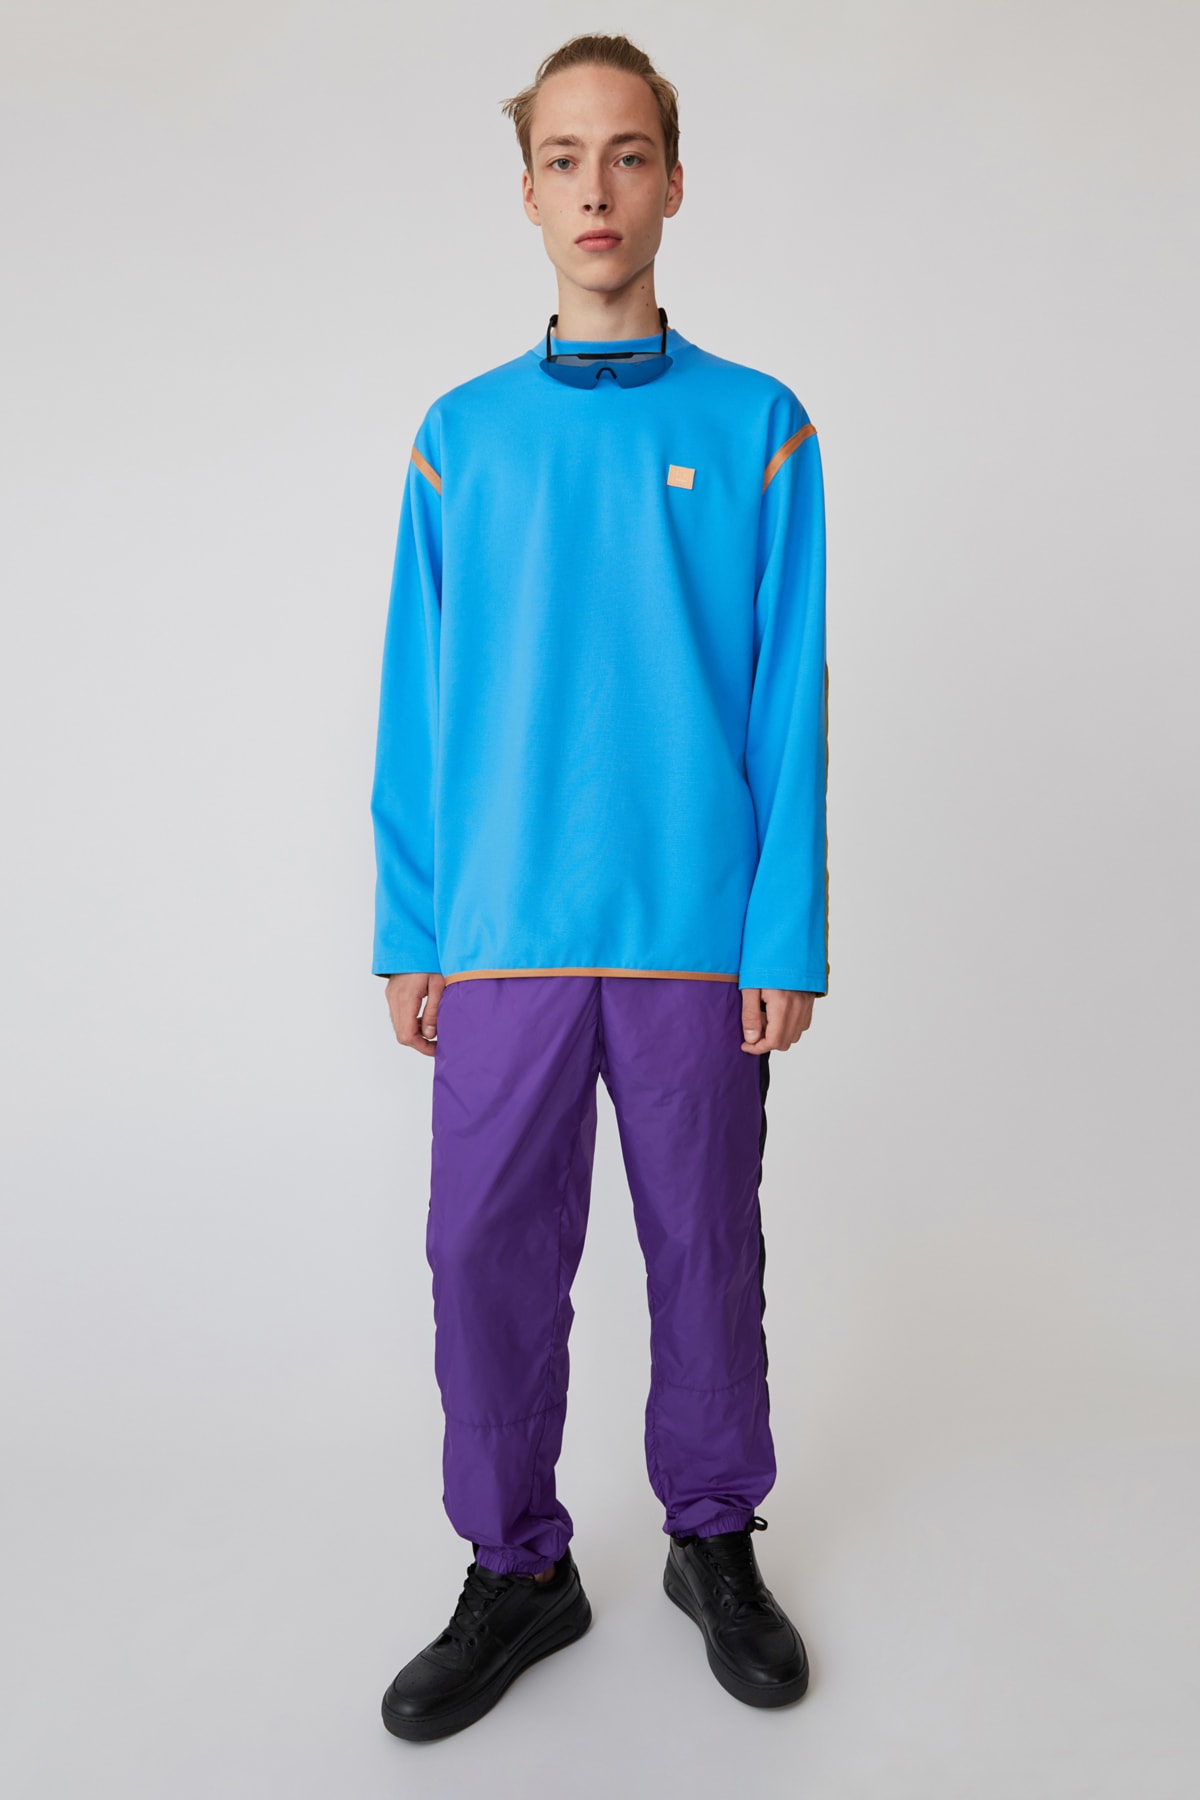 Acne Studios Spring/Summer 2019 Face Collection Sweatshirt Blue Pants Purple